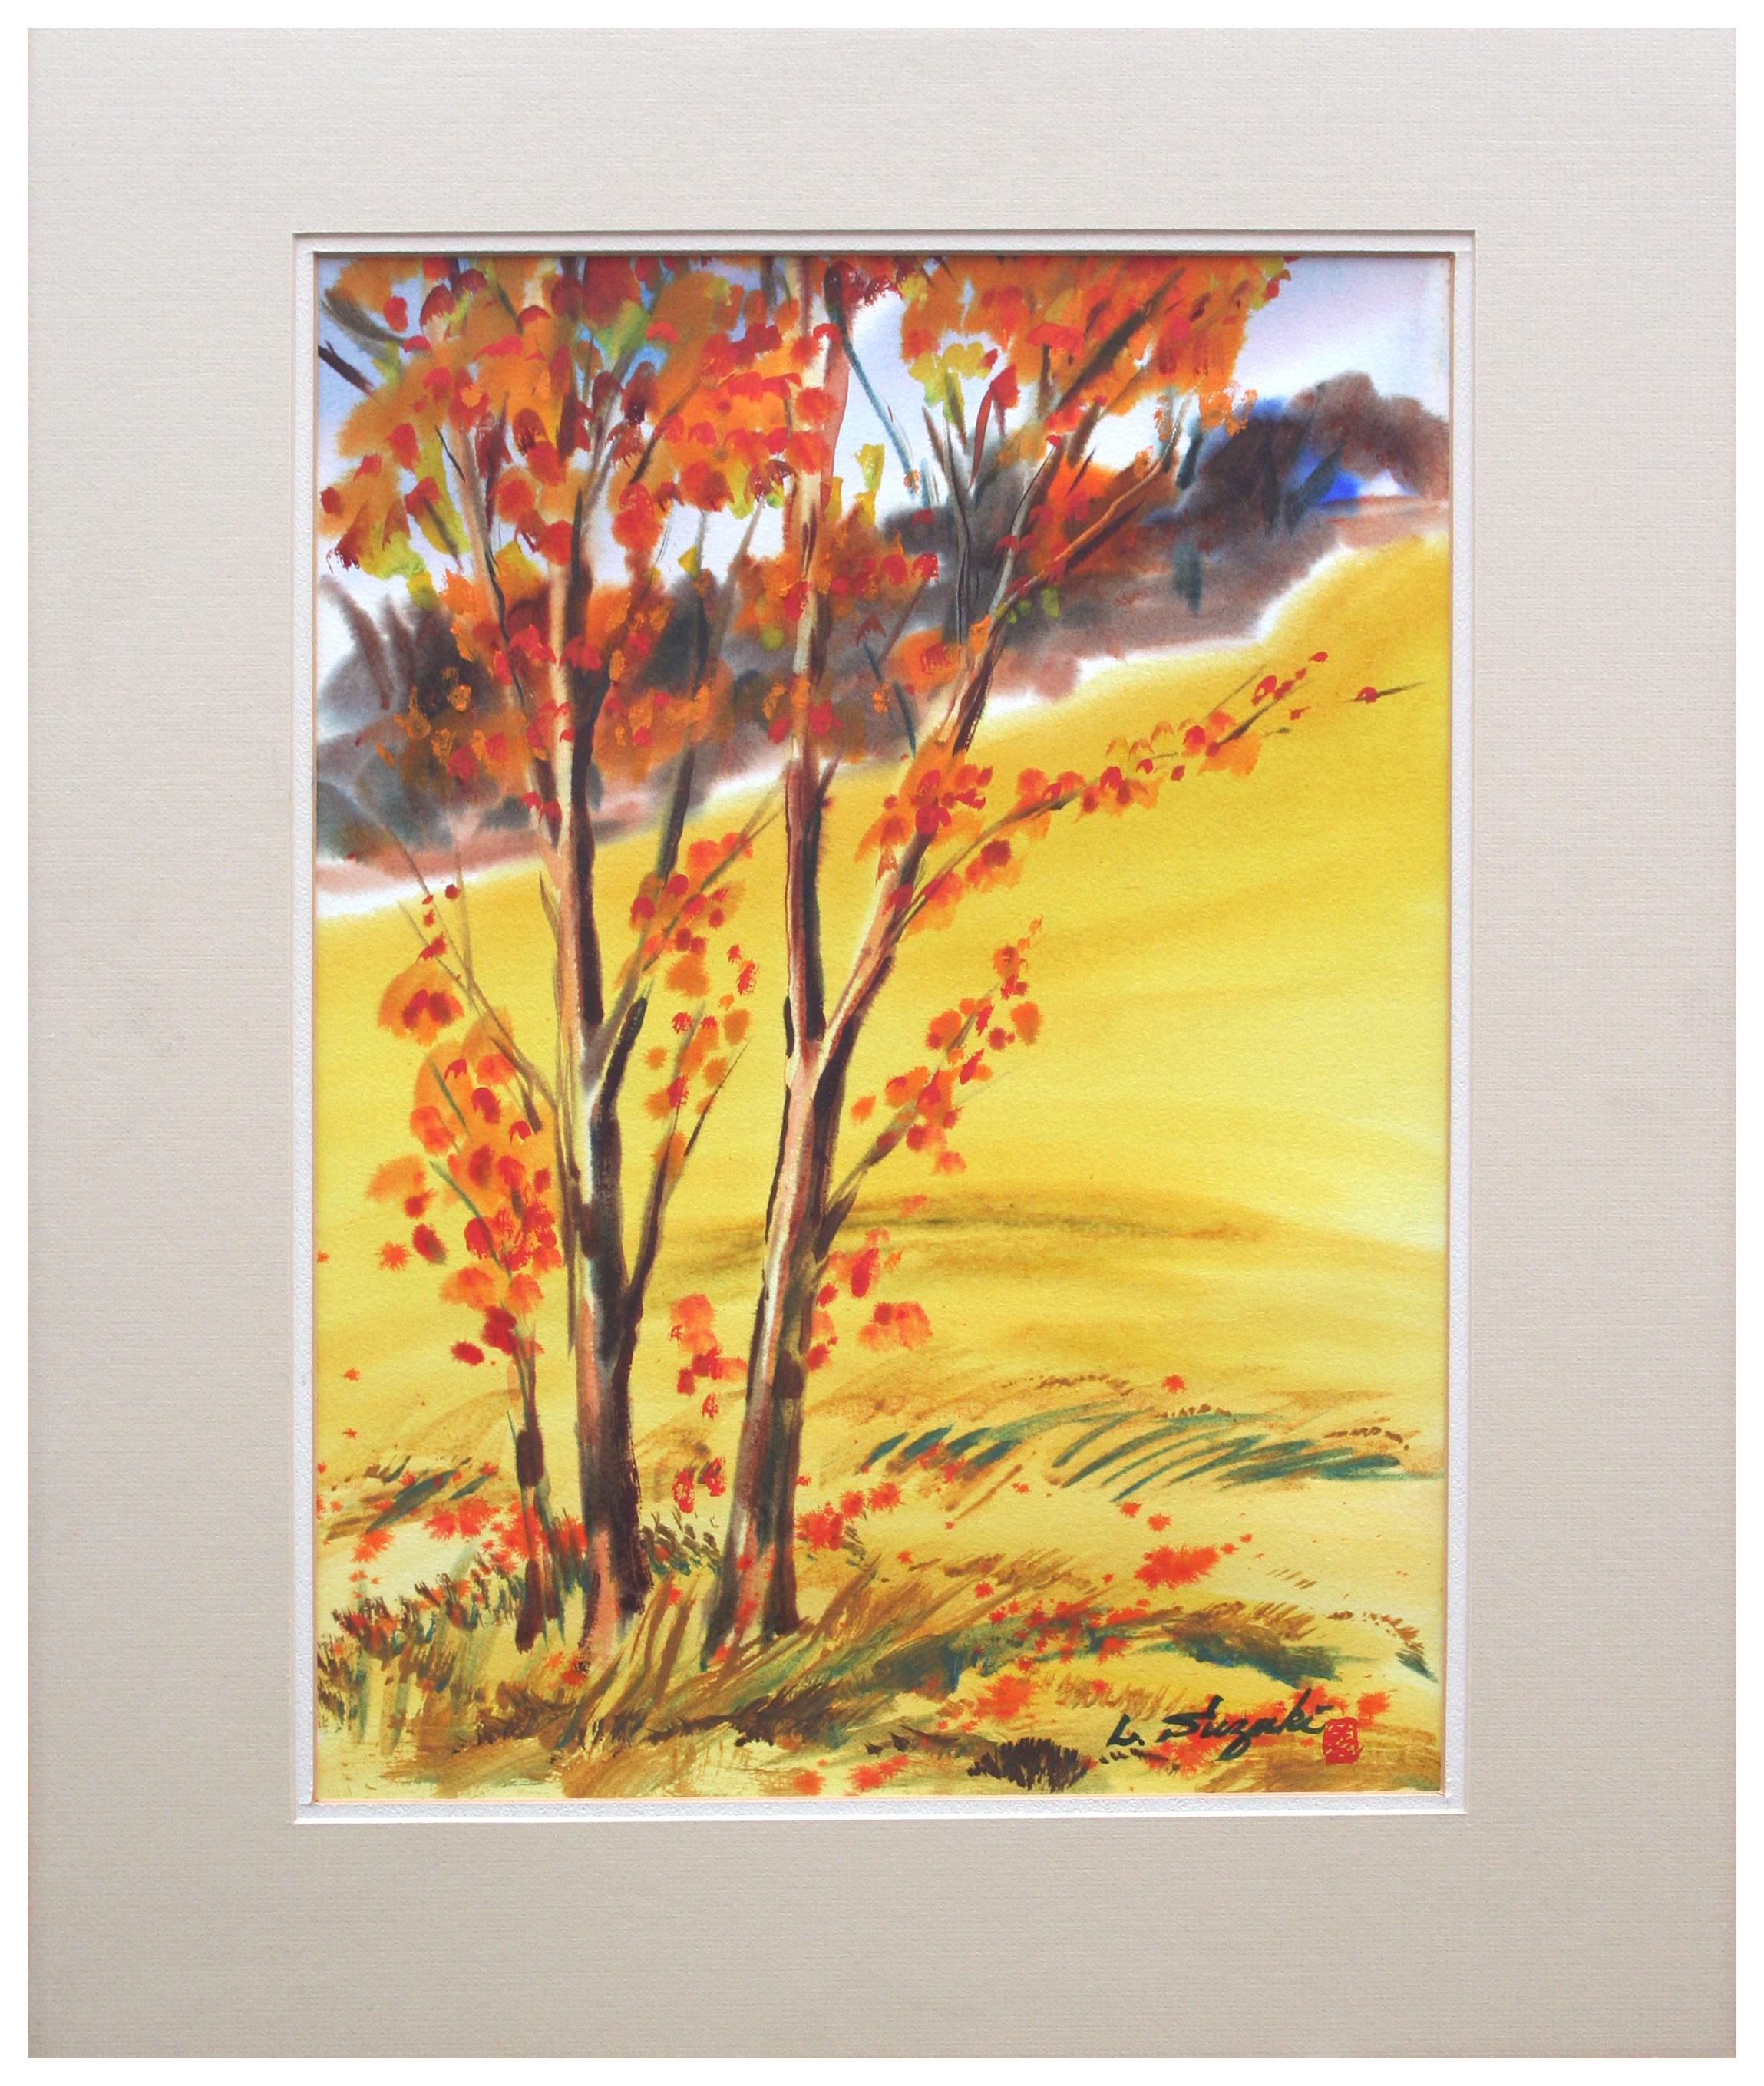 Lewis Suzuki Landscape Art - Aspen in Fall, 1970s Vintage Autumn Landscape Watercolor